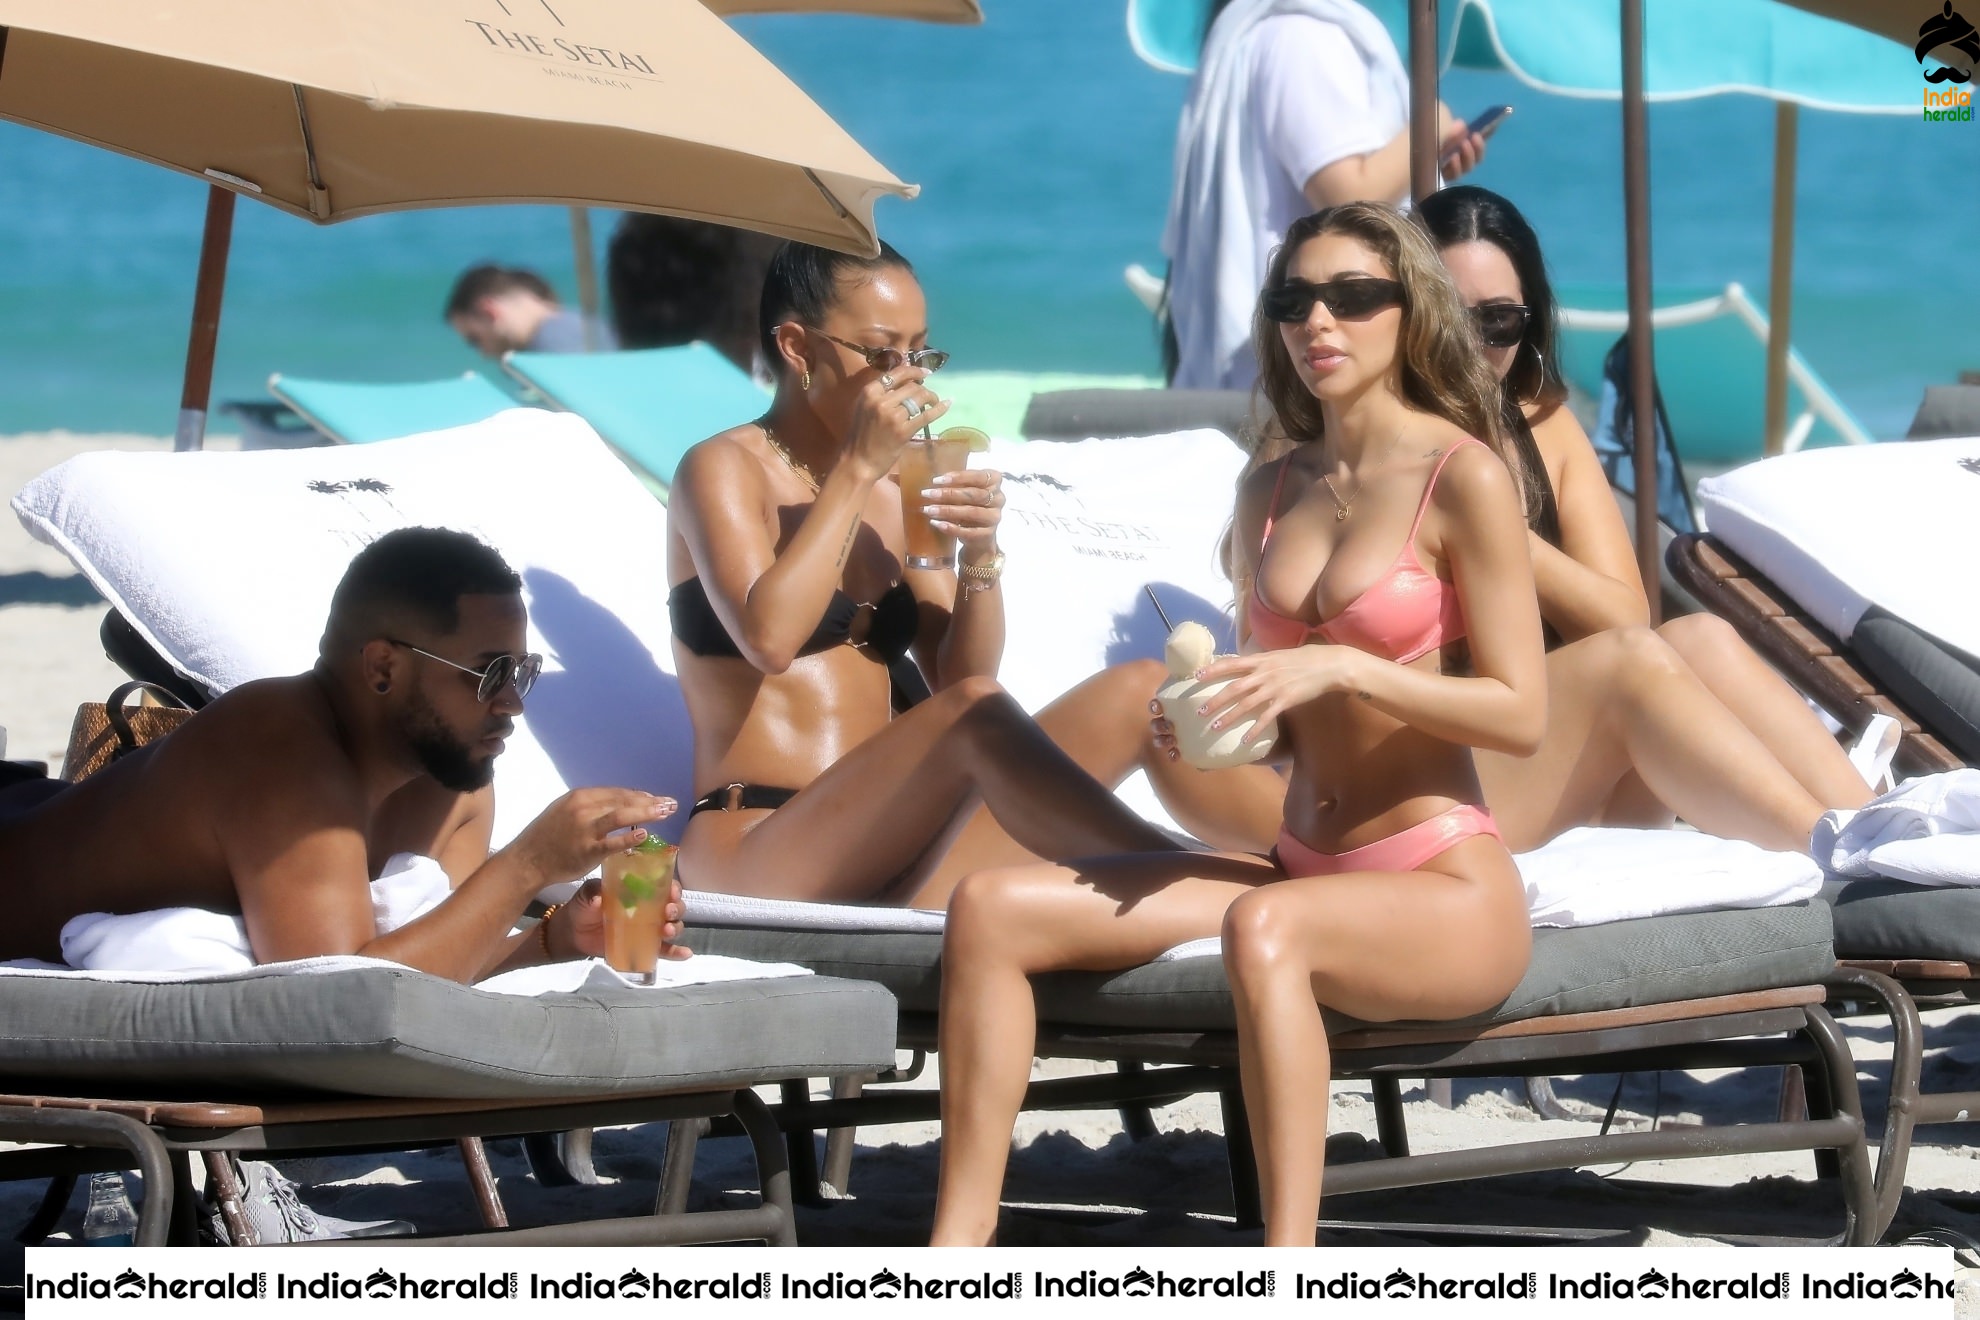 Karrueche Tran and Chantel Jeffries spotted in Bikini on the beach in Miami